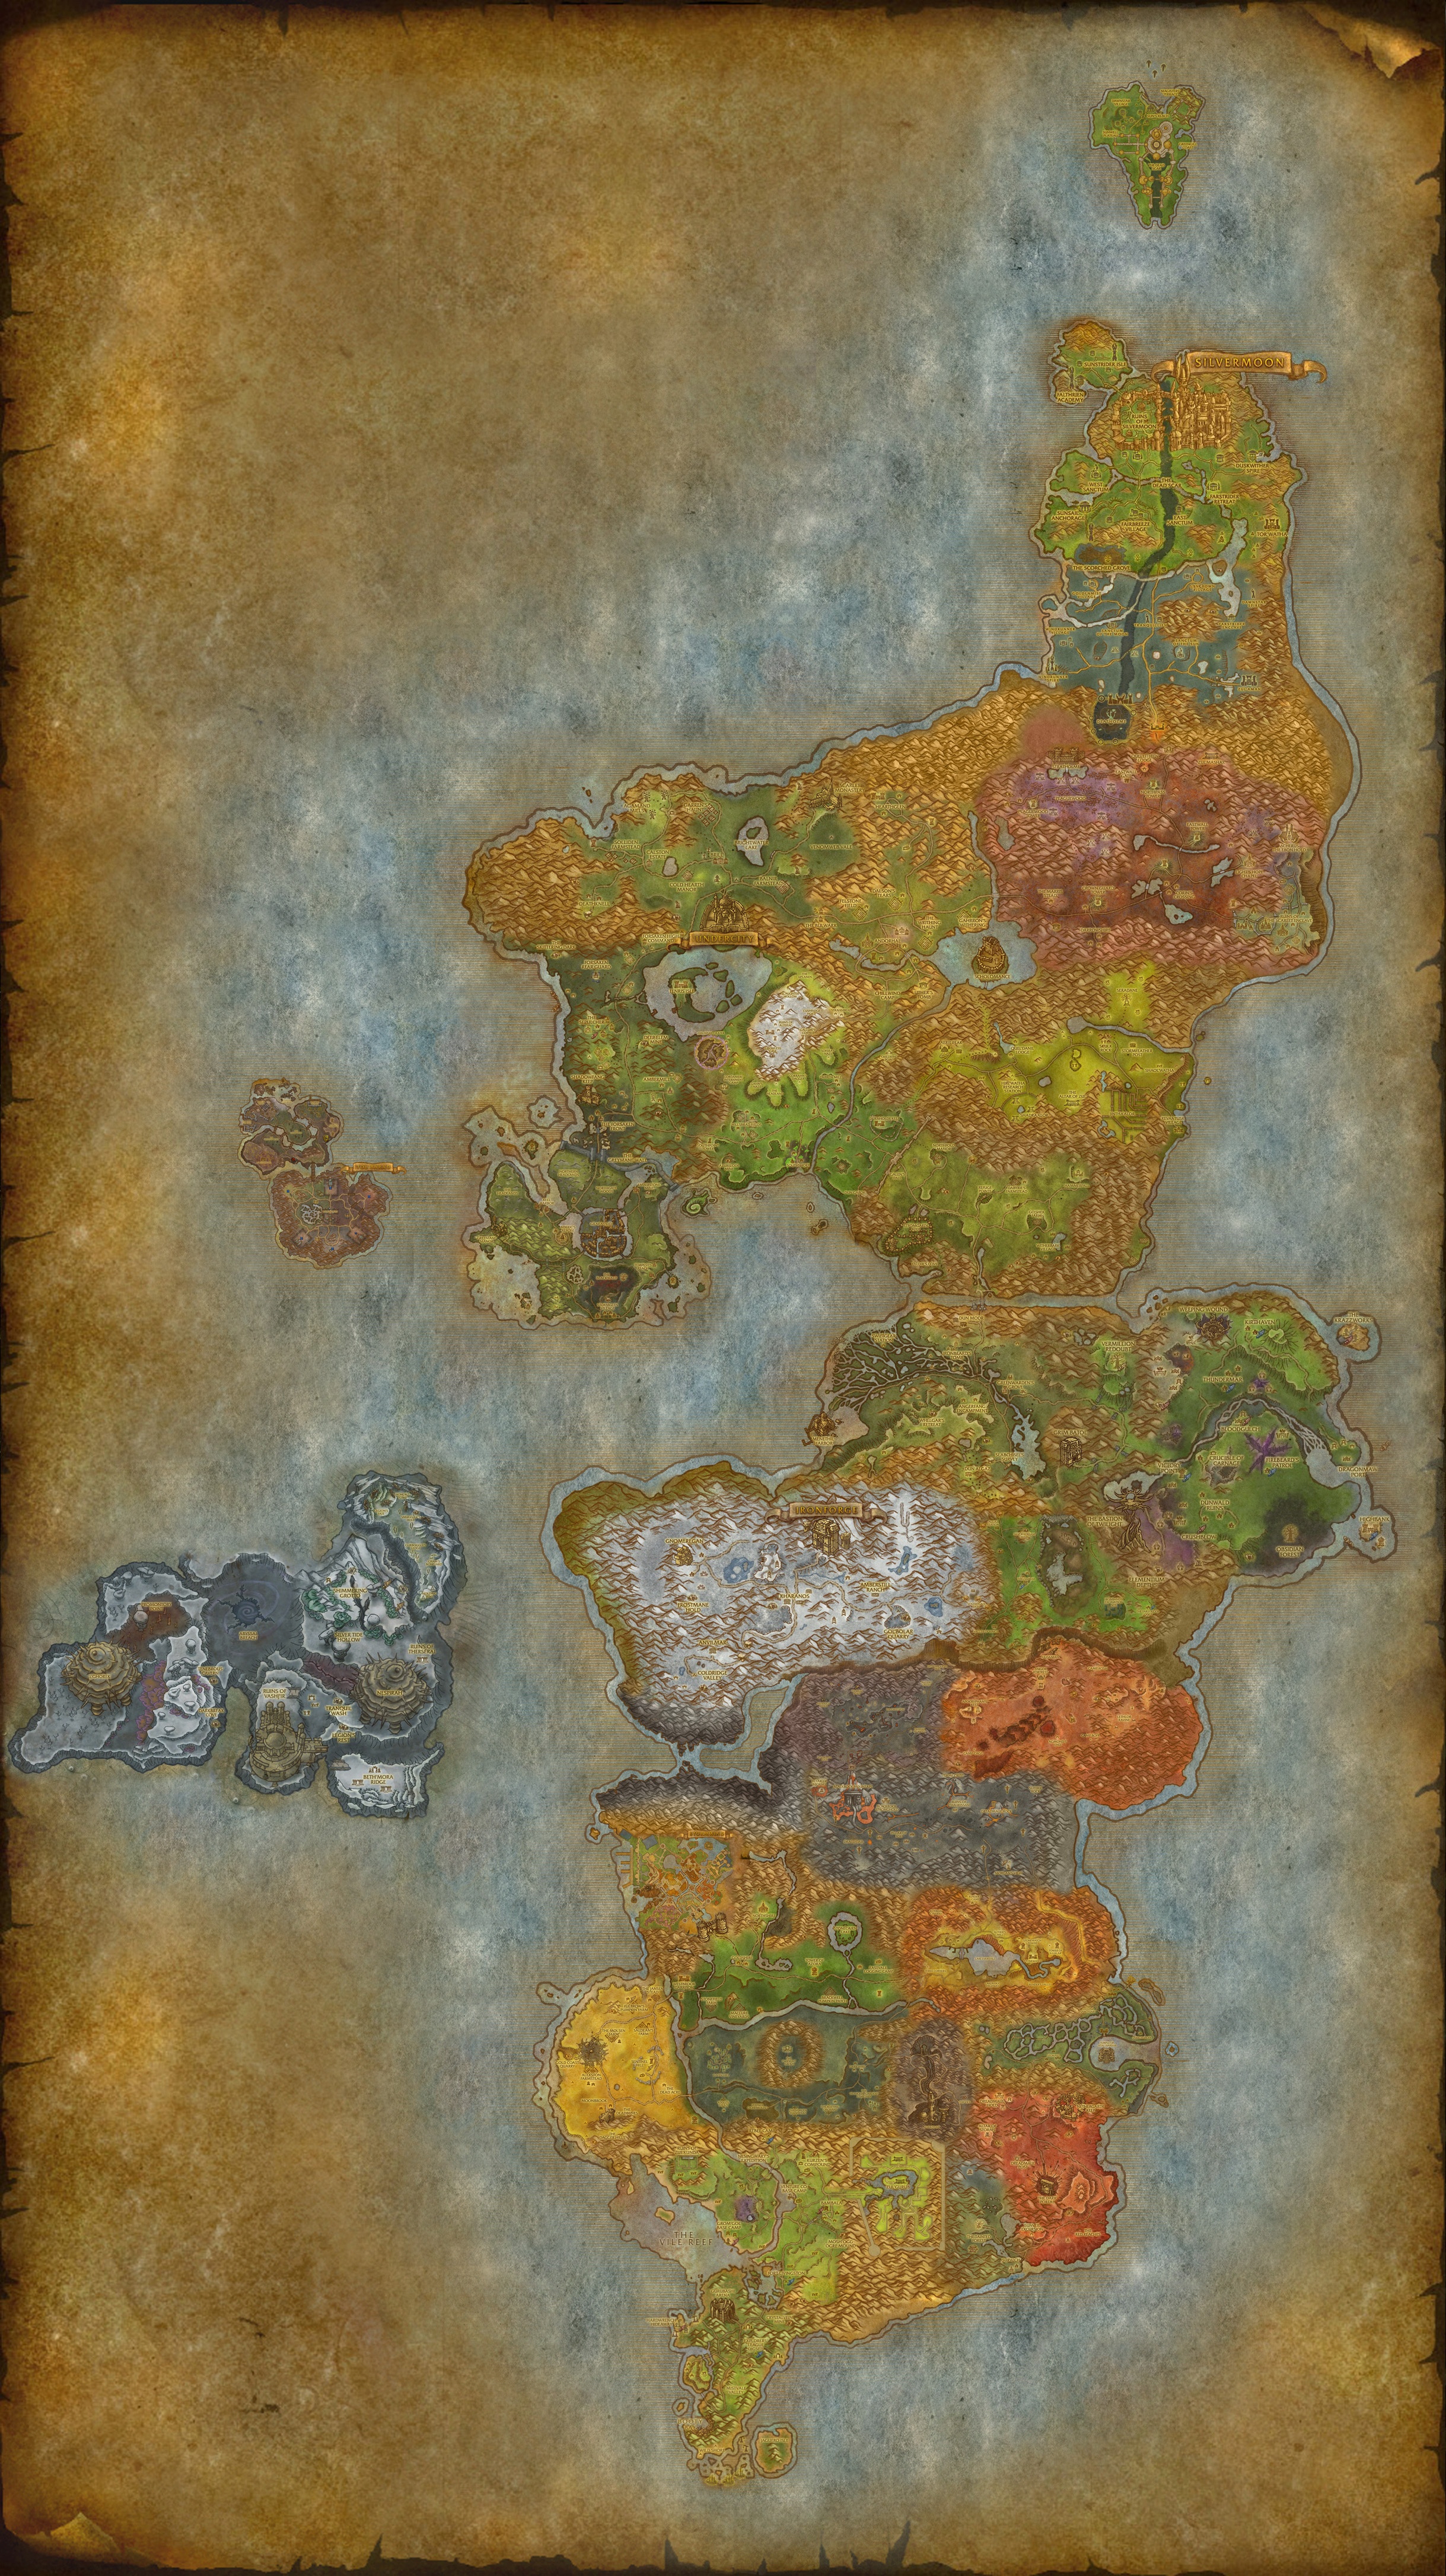 World of Warcraft - desktop wallpaper